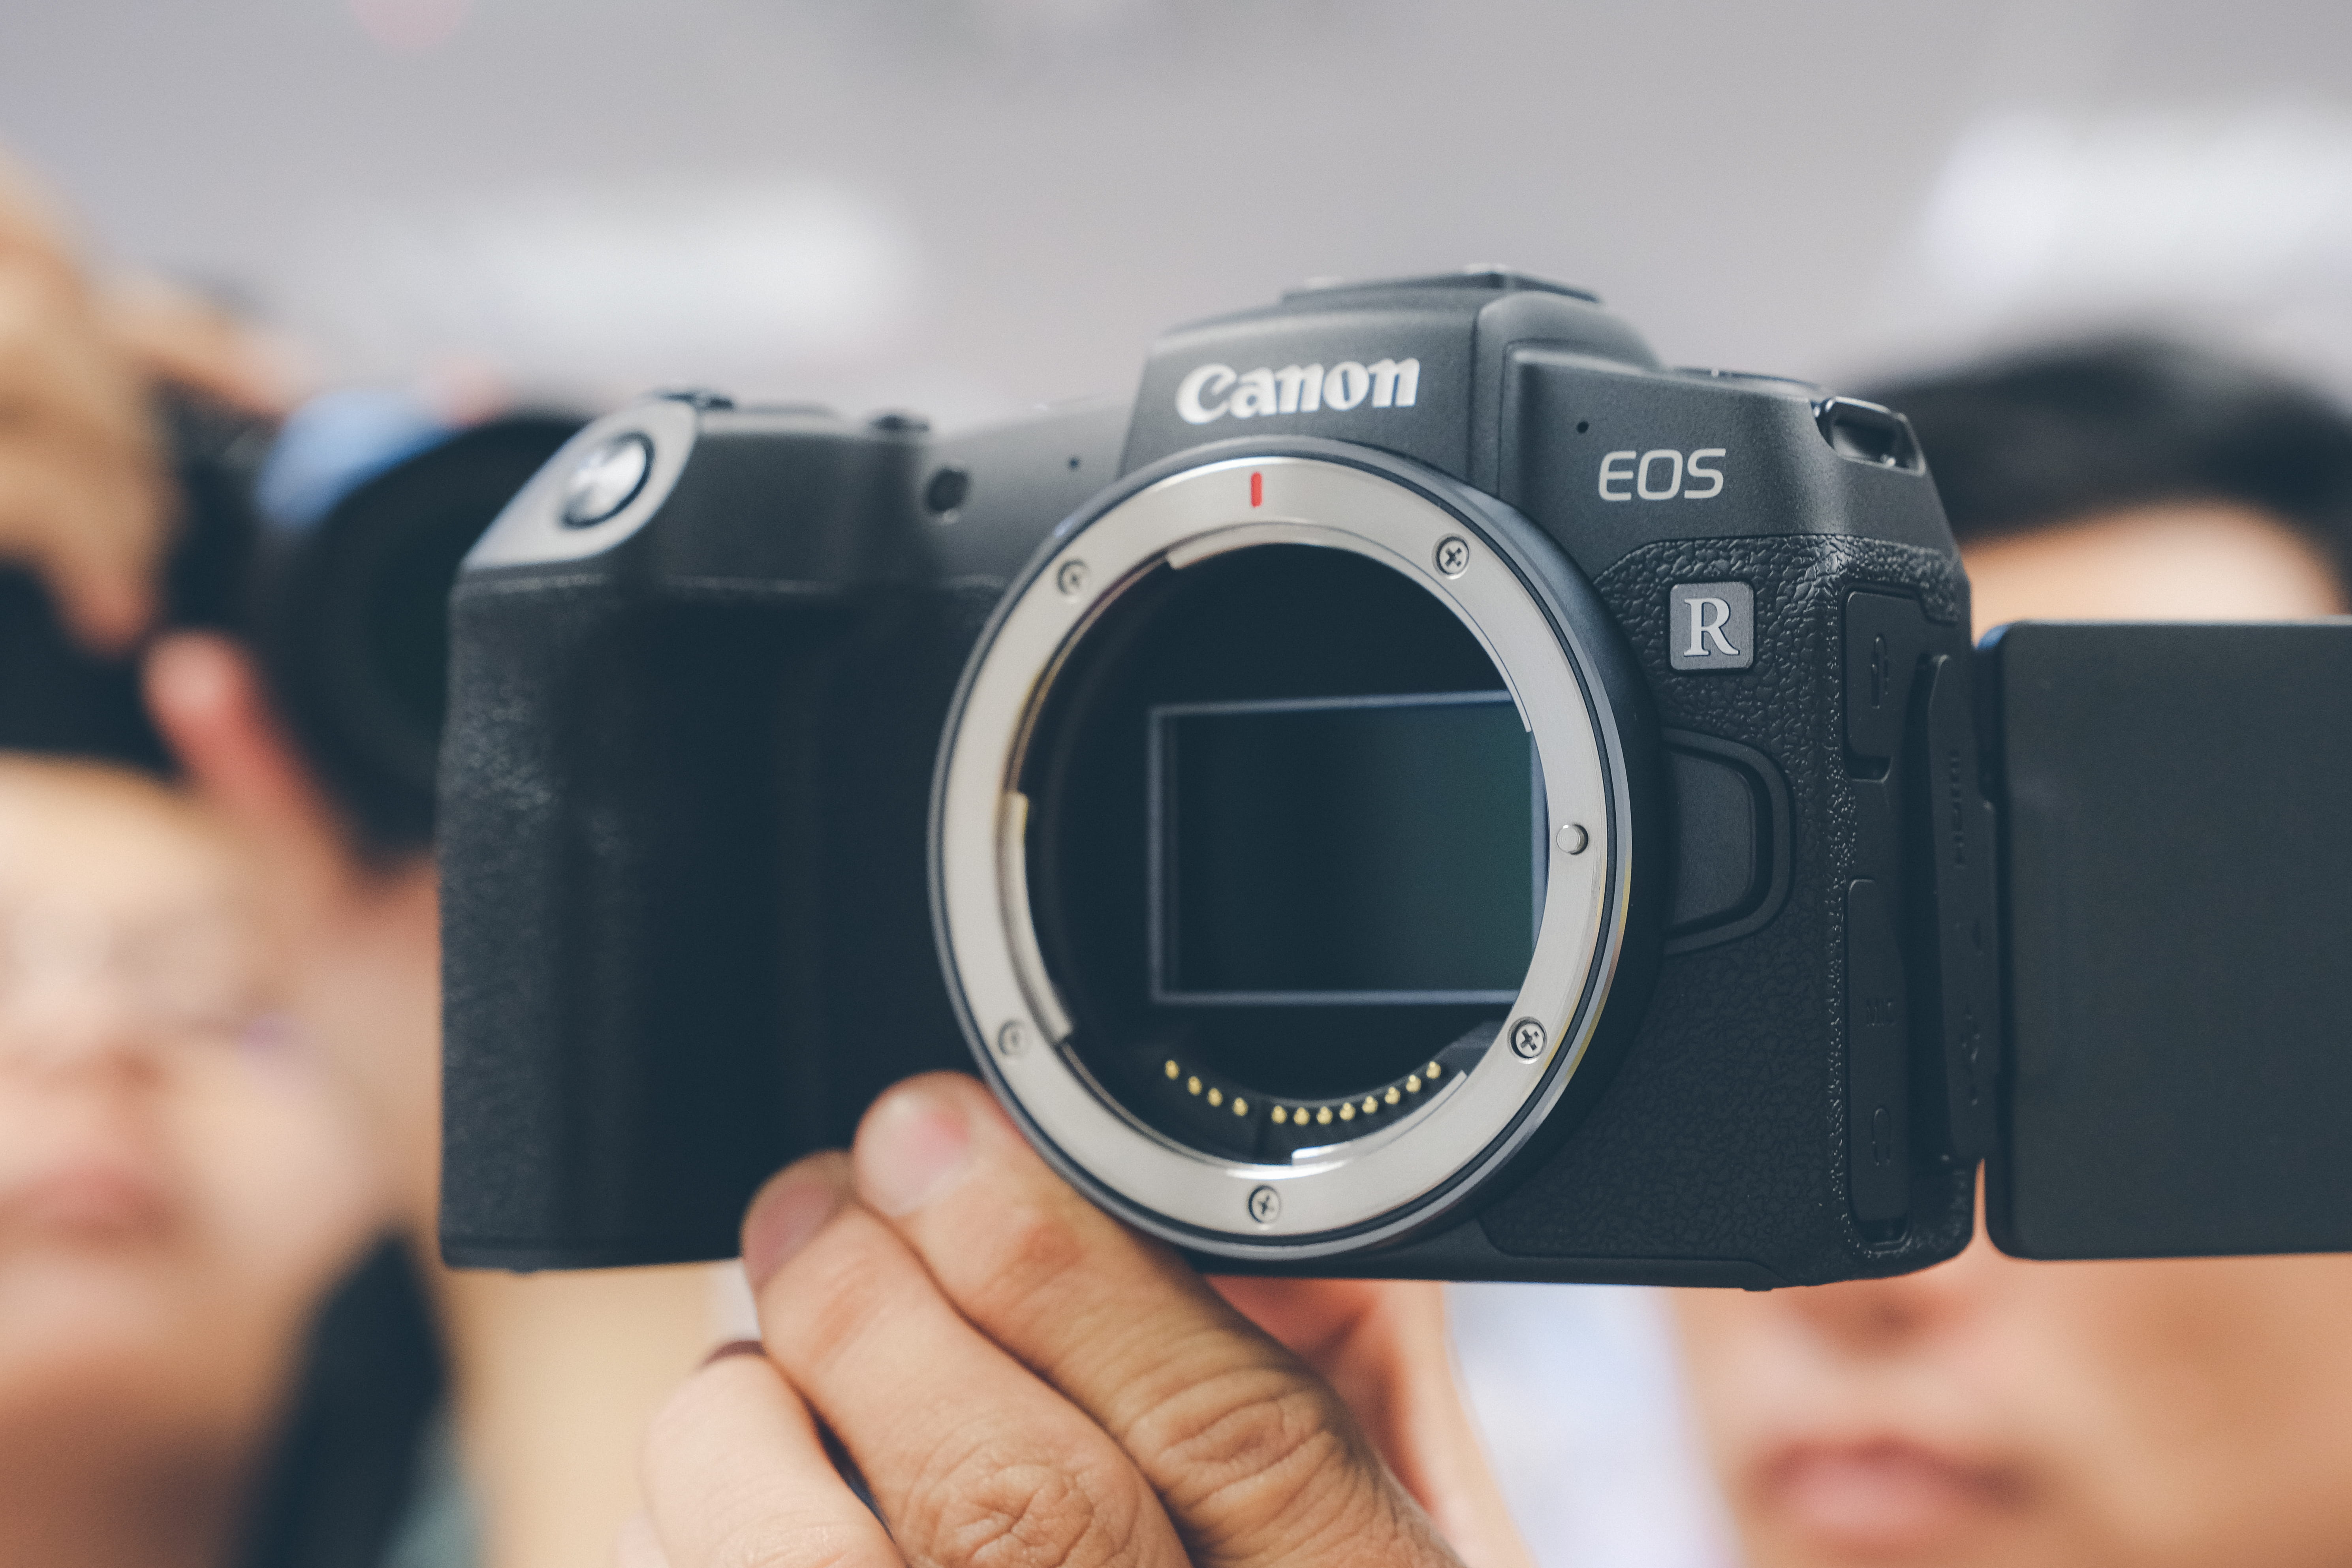 black Canon EOS R camera with no camera lens attach, electronics